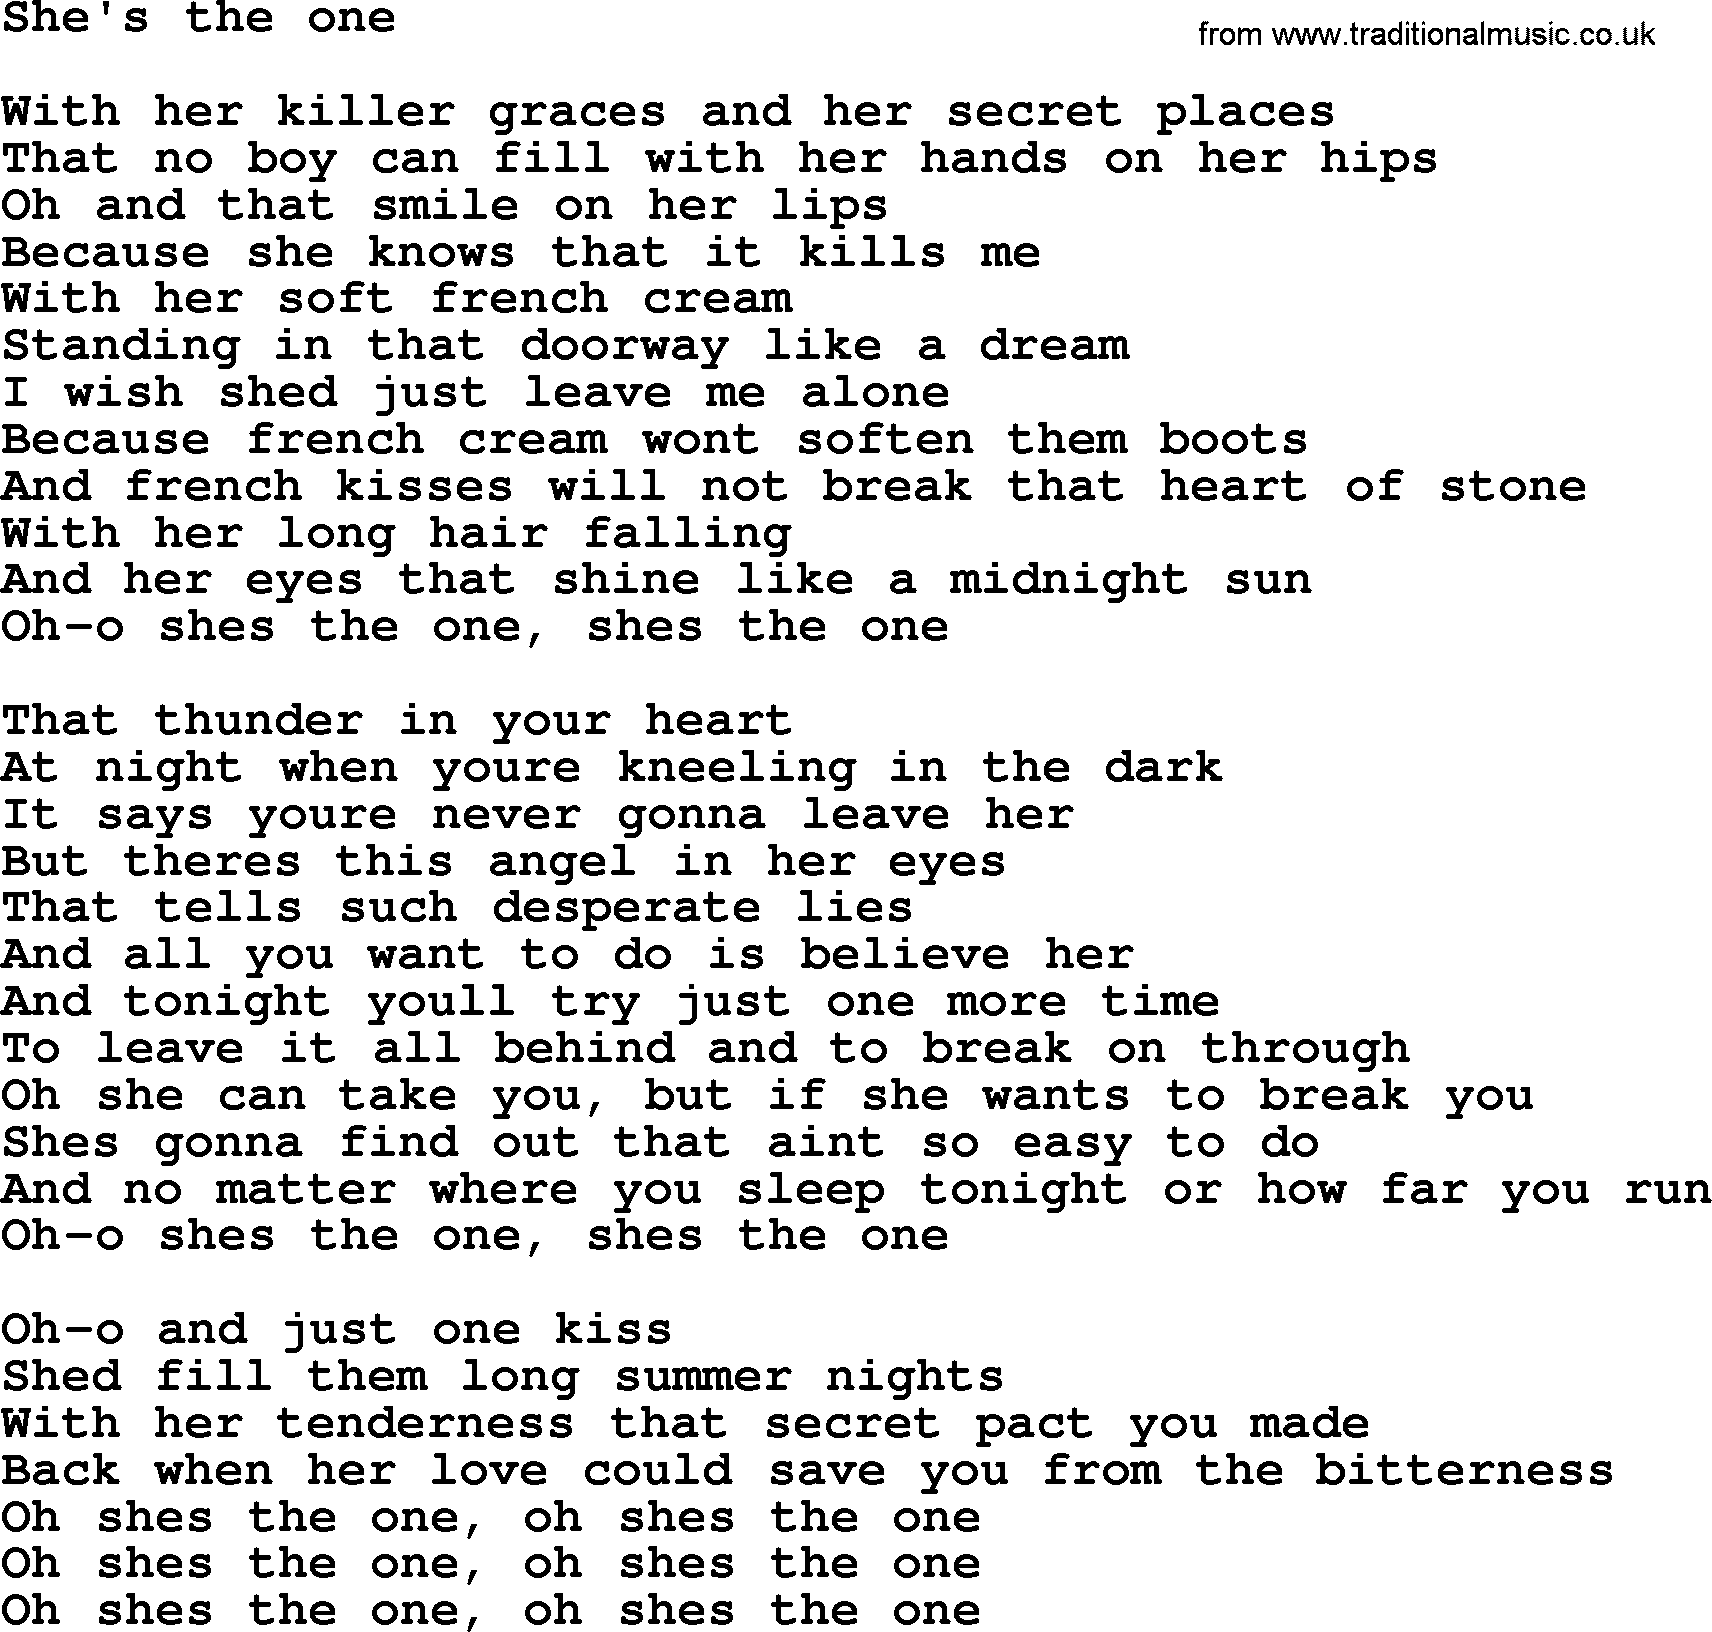 Bruce Springsteen song: She's The One lyrics